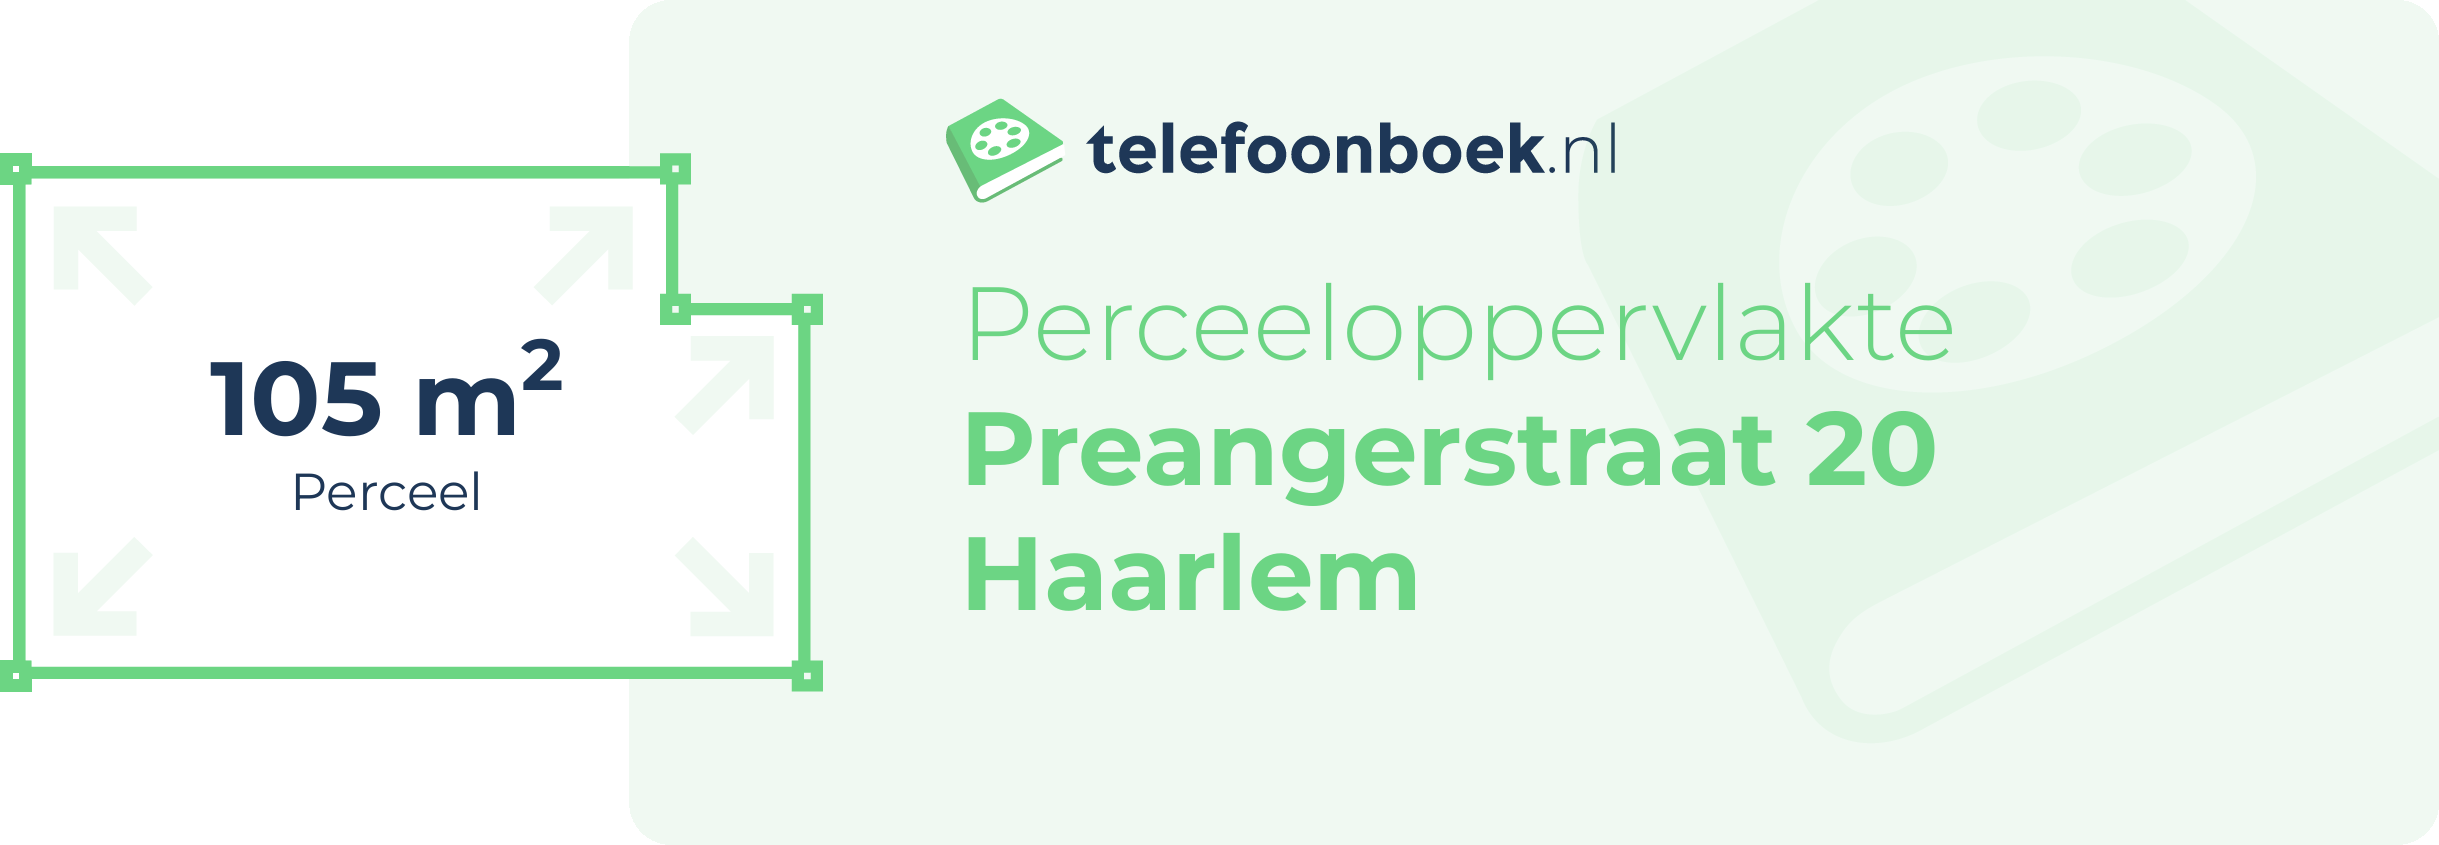 Perceeloppervlakte Preangerstraat 20 Haarlem